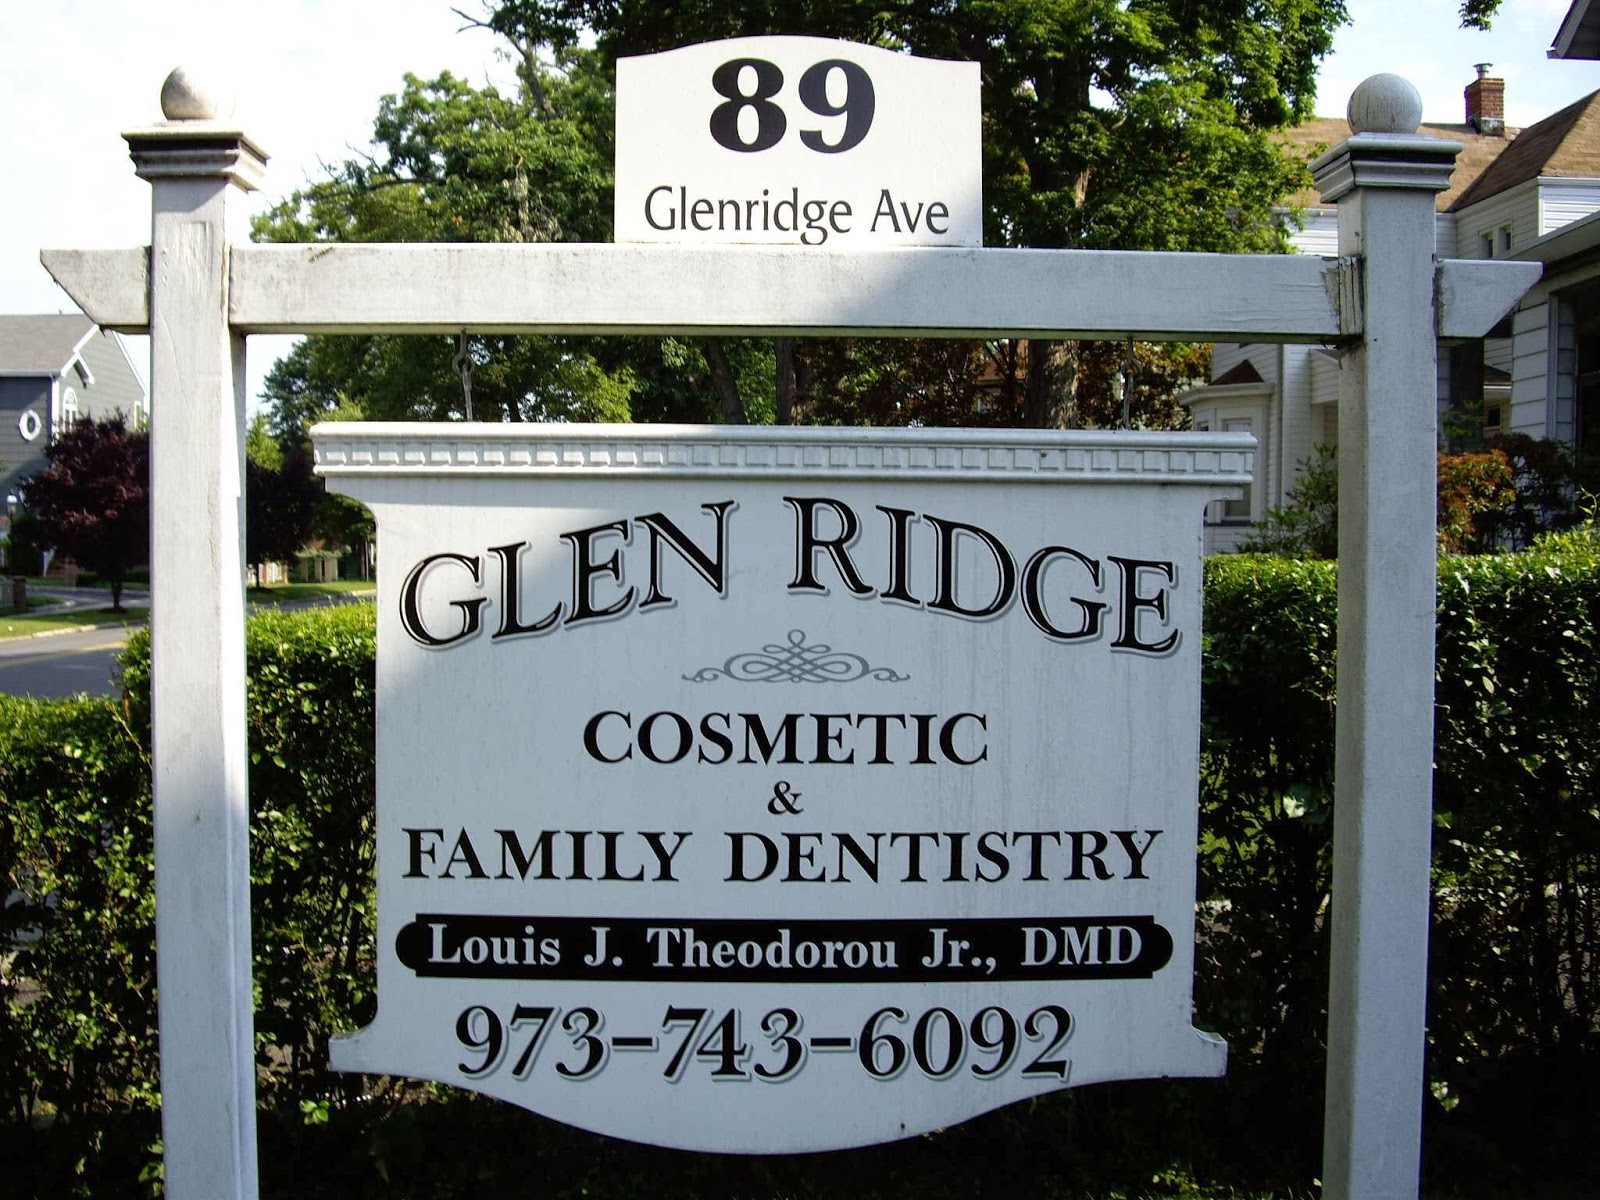 Photo of Glen Ridge Cosmetic & Family Dentistry: Theodorou Jr Louis J DDS in Glen Ridge City, New Jersey, United States - 1 Picture of Point of interest, Establishment, Health, Dentist